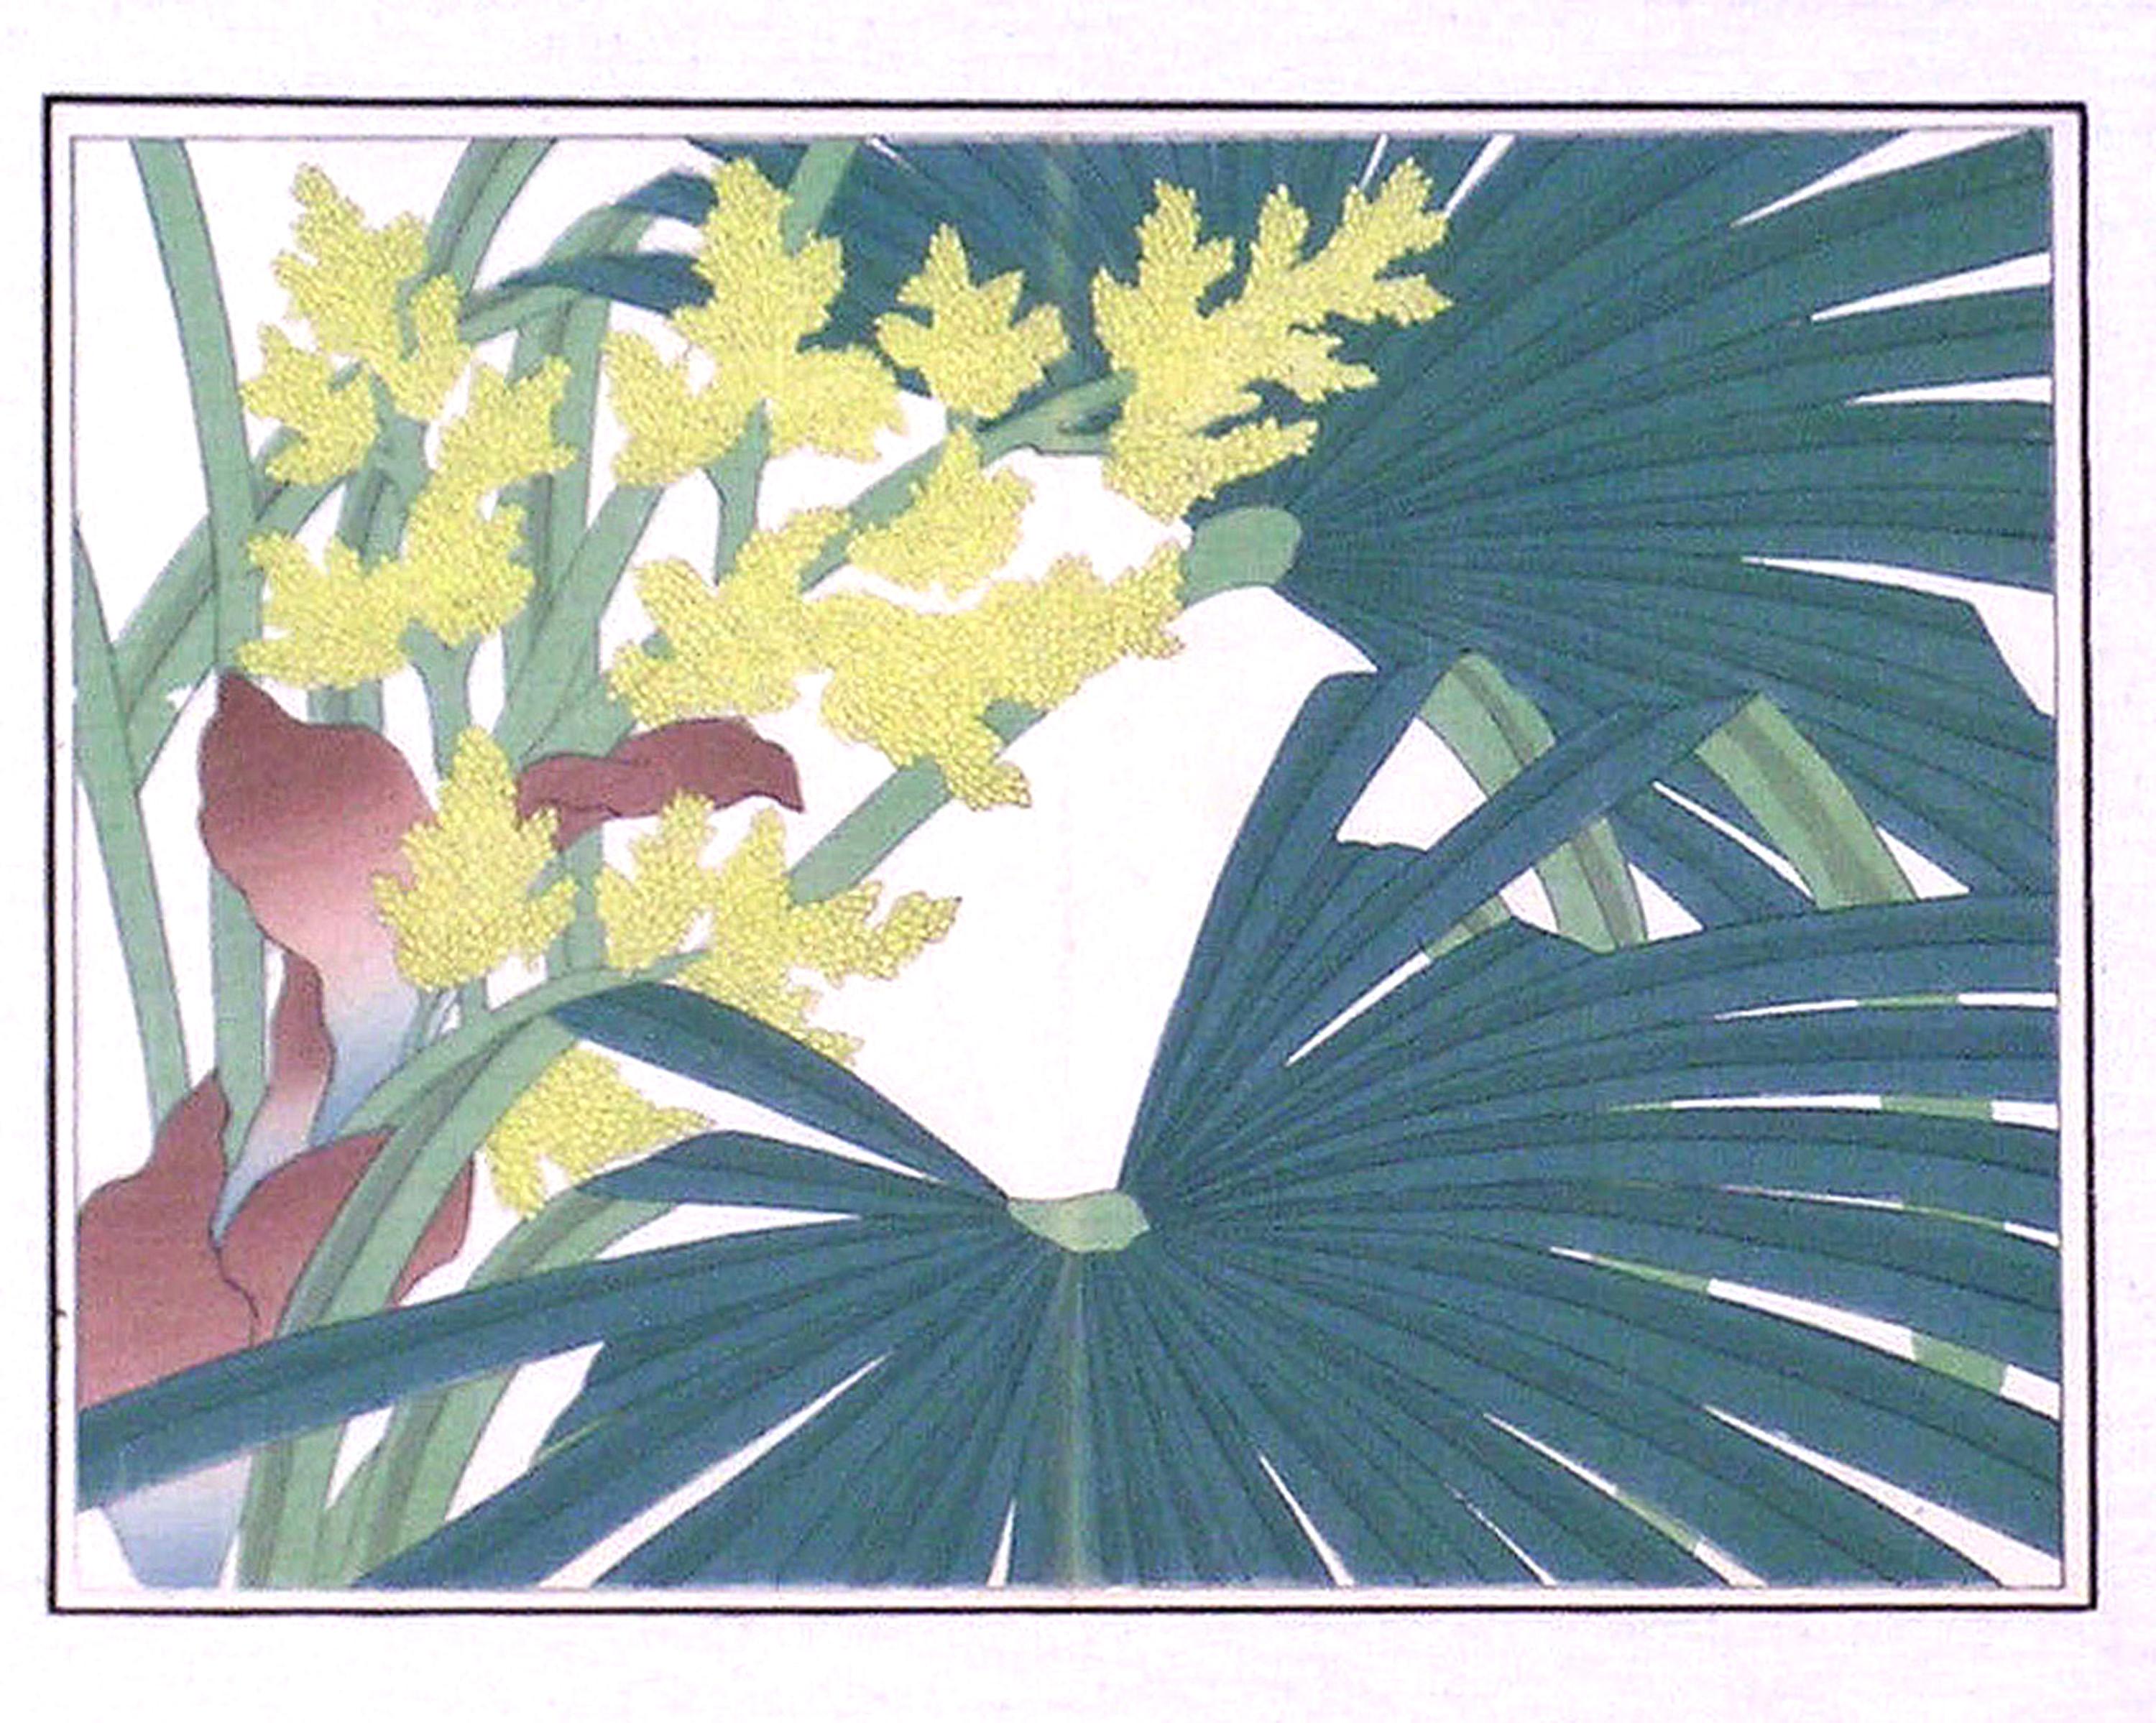 Kono Bairei (1844 – 1895)
One Hundred Flowering Plants.
Japan, 1901.  (Posthumous.)
Woodblock Print.
15 x 11.unframed.
Okura Magobei, Publisher.

The enthusiasm for nature prints transcends the centuries.  “One Hundred Flowering Plants” is a